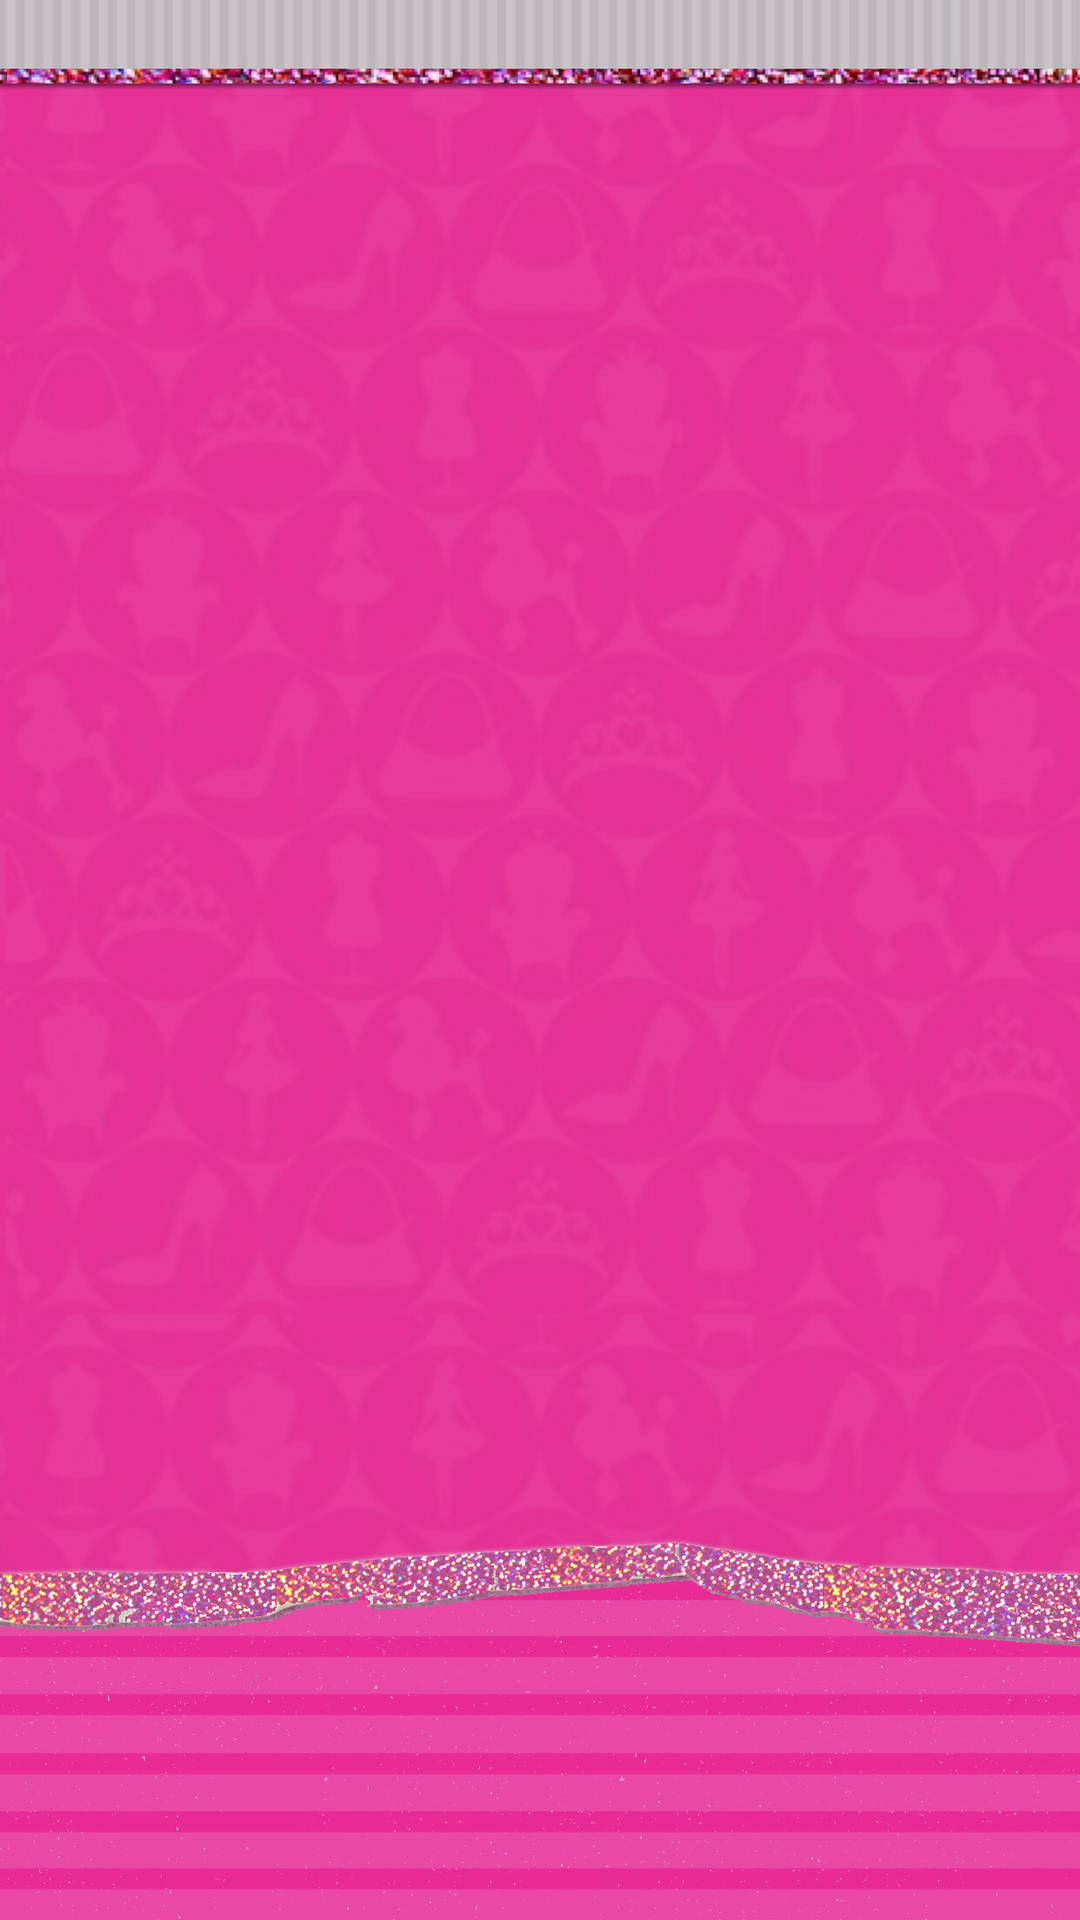 Pink Cute Girly Phone Screen Theme Wallpaper